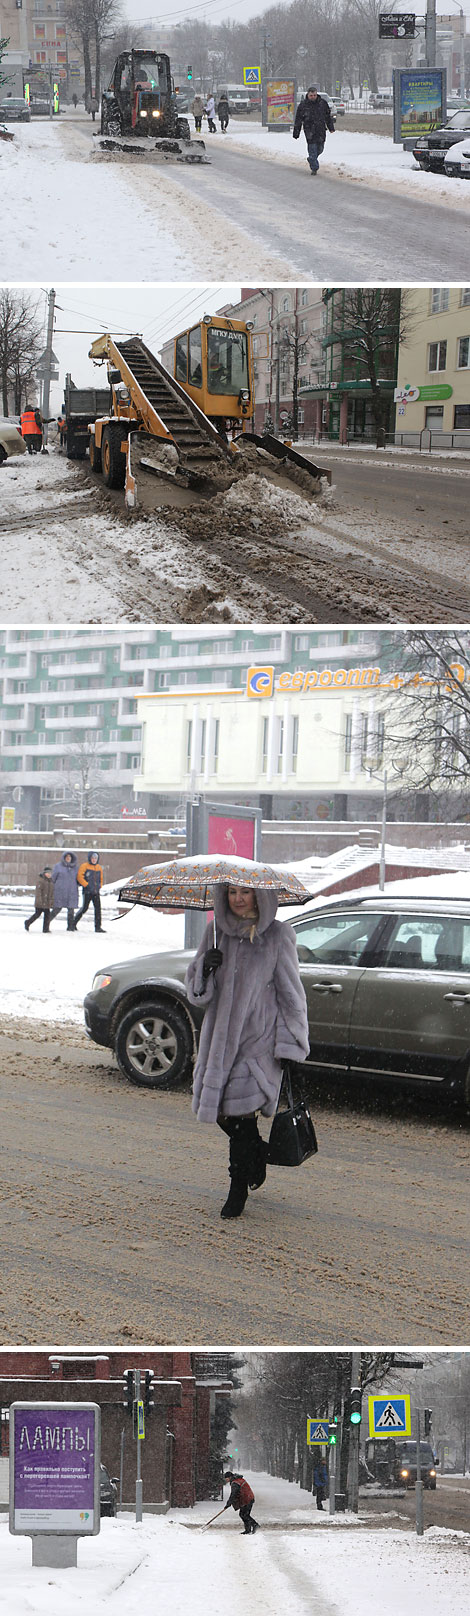 Mogilev covered in snow